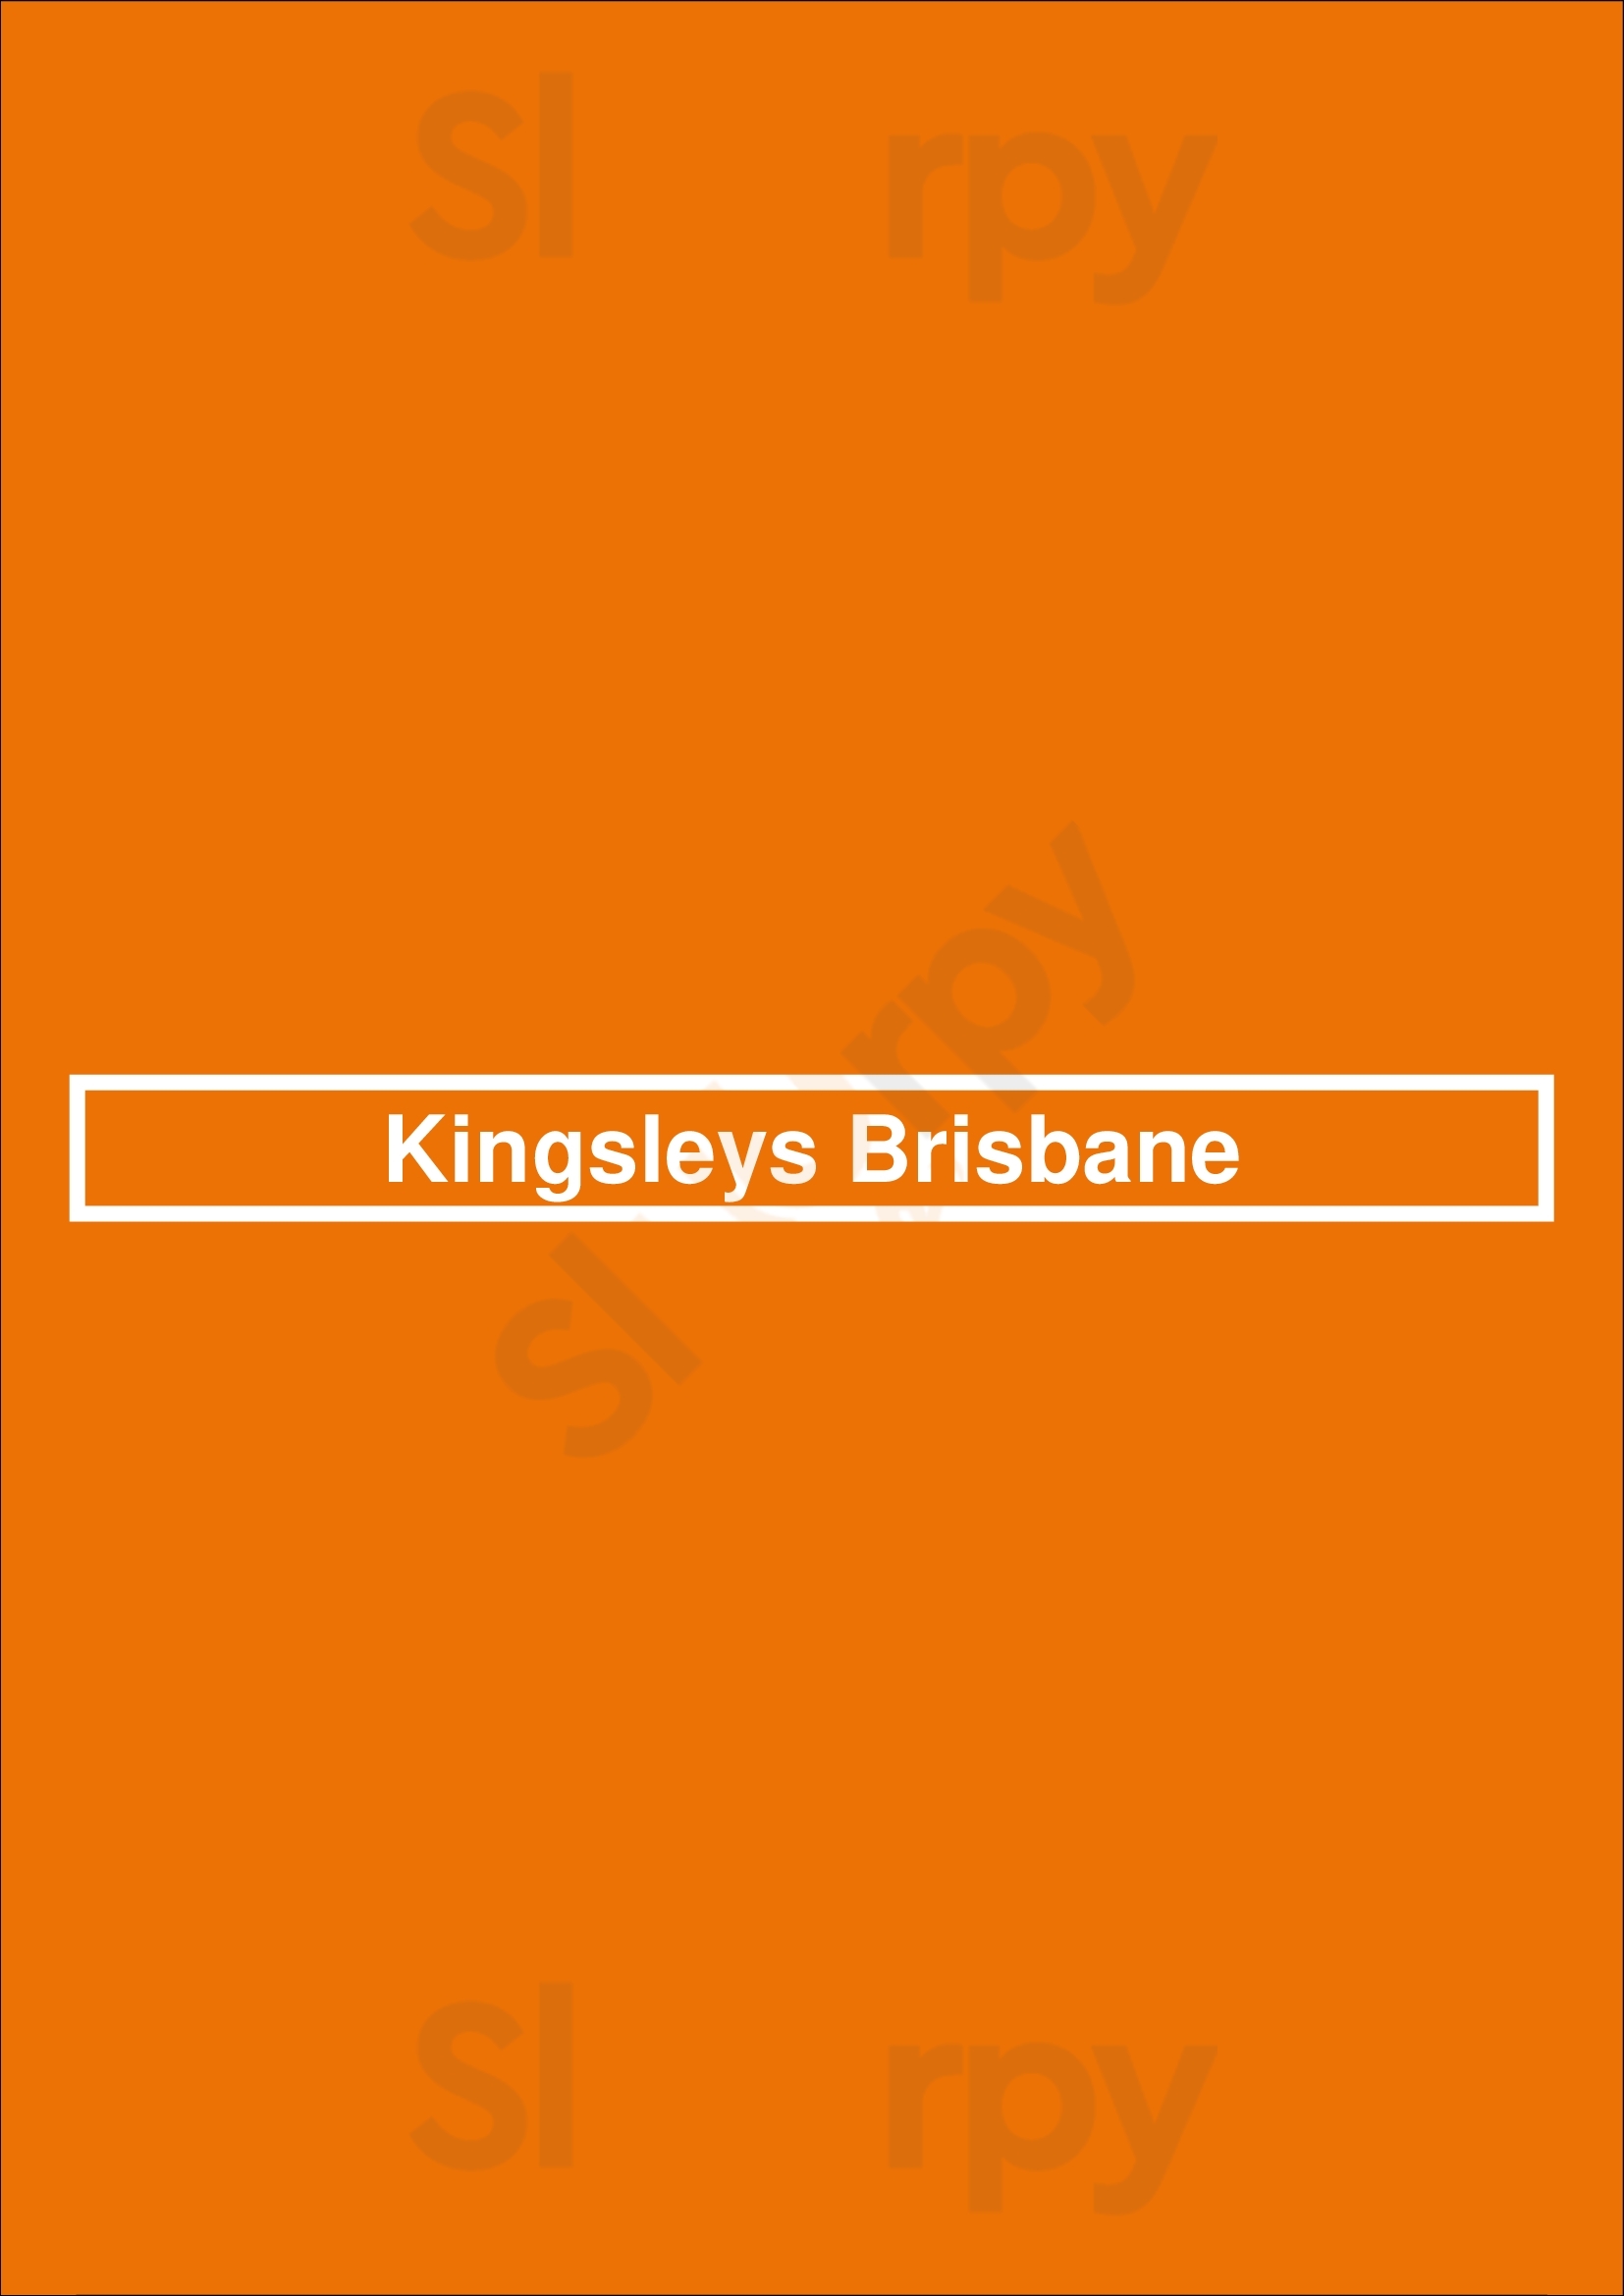 Kingsleys Brisbane Brisbane Menu - 1